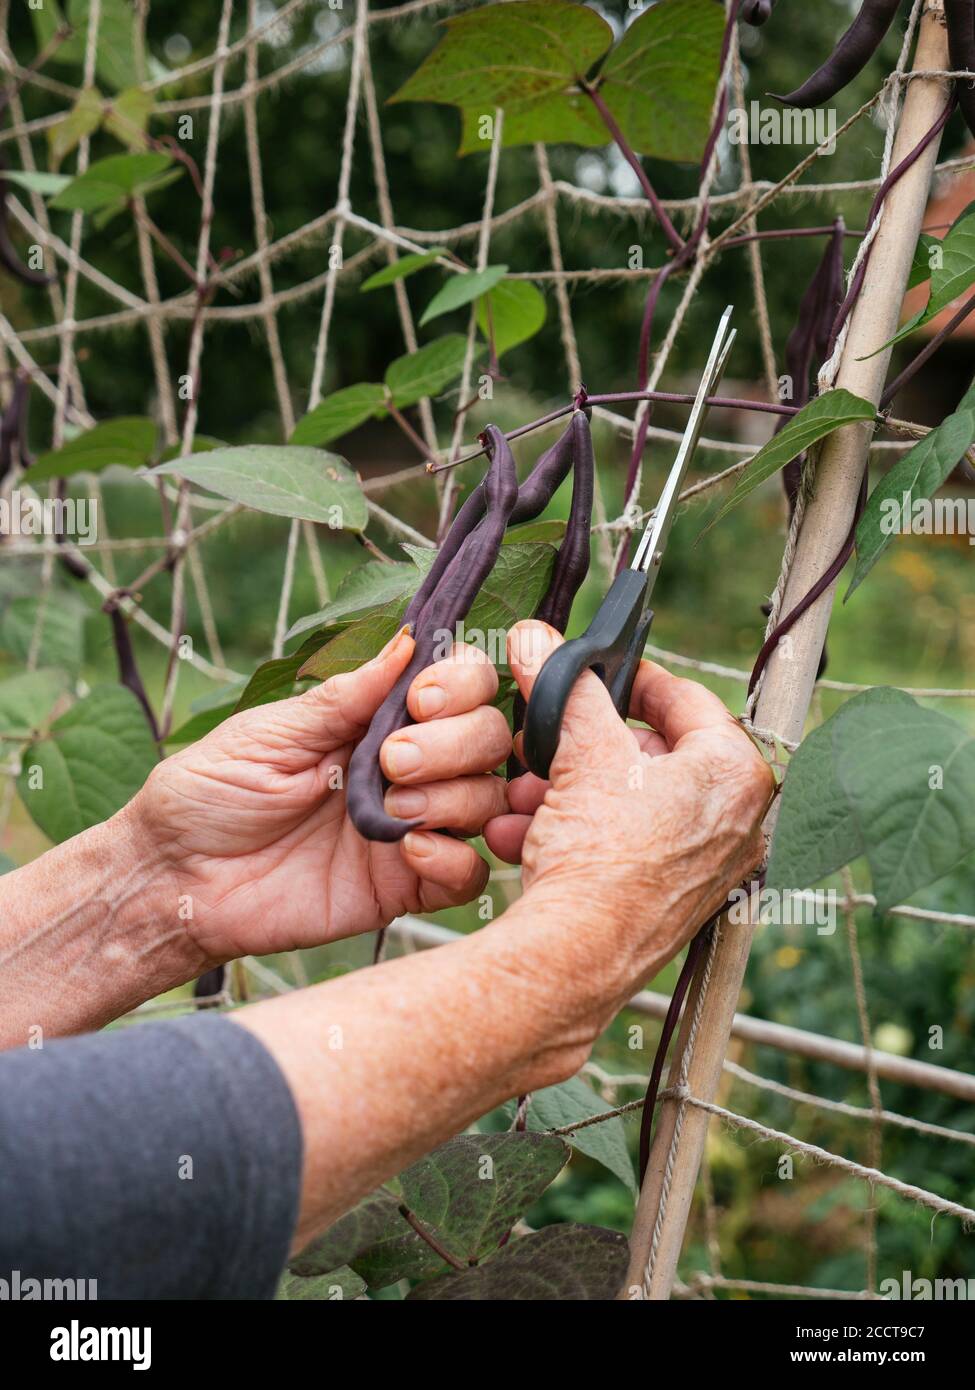 Gardener harvesting purple beans growing on a trellis. Stock Photo